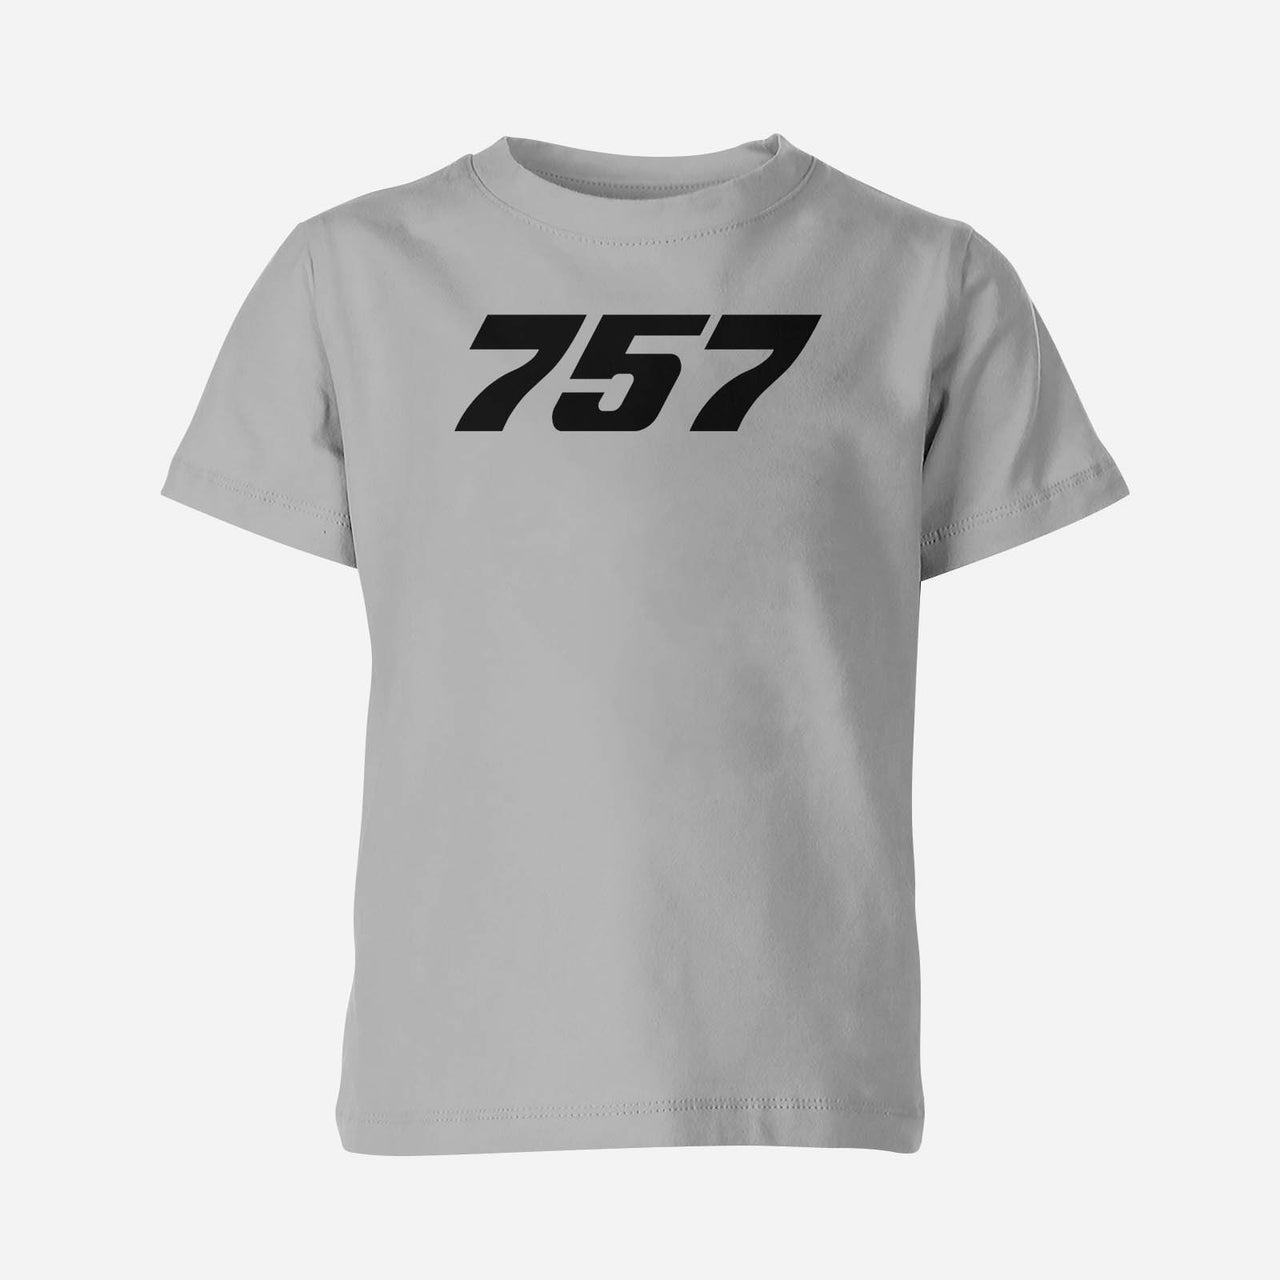 757 Flat Text Designed Children T-Shirts